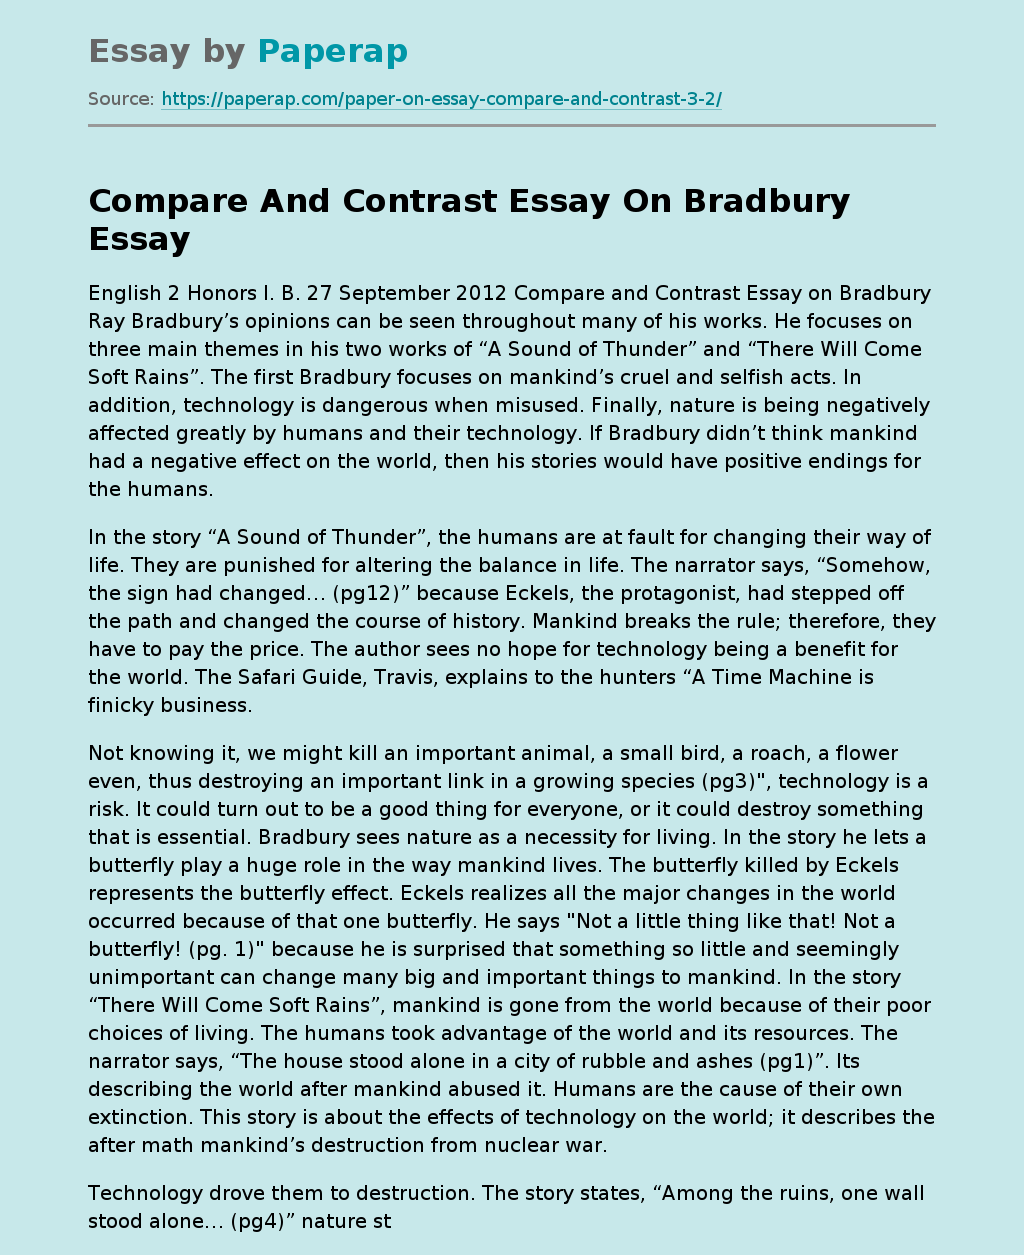 Compare And Contrast Essay On Bradbury